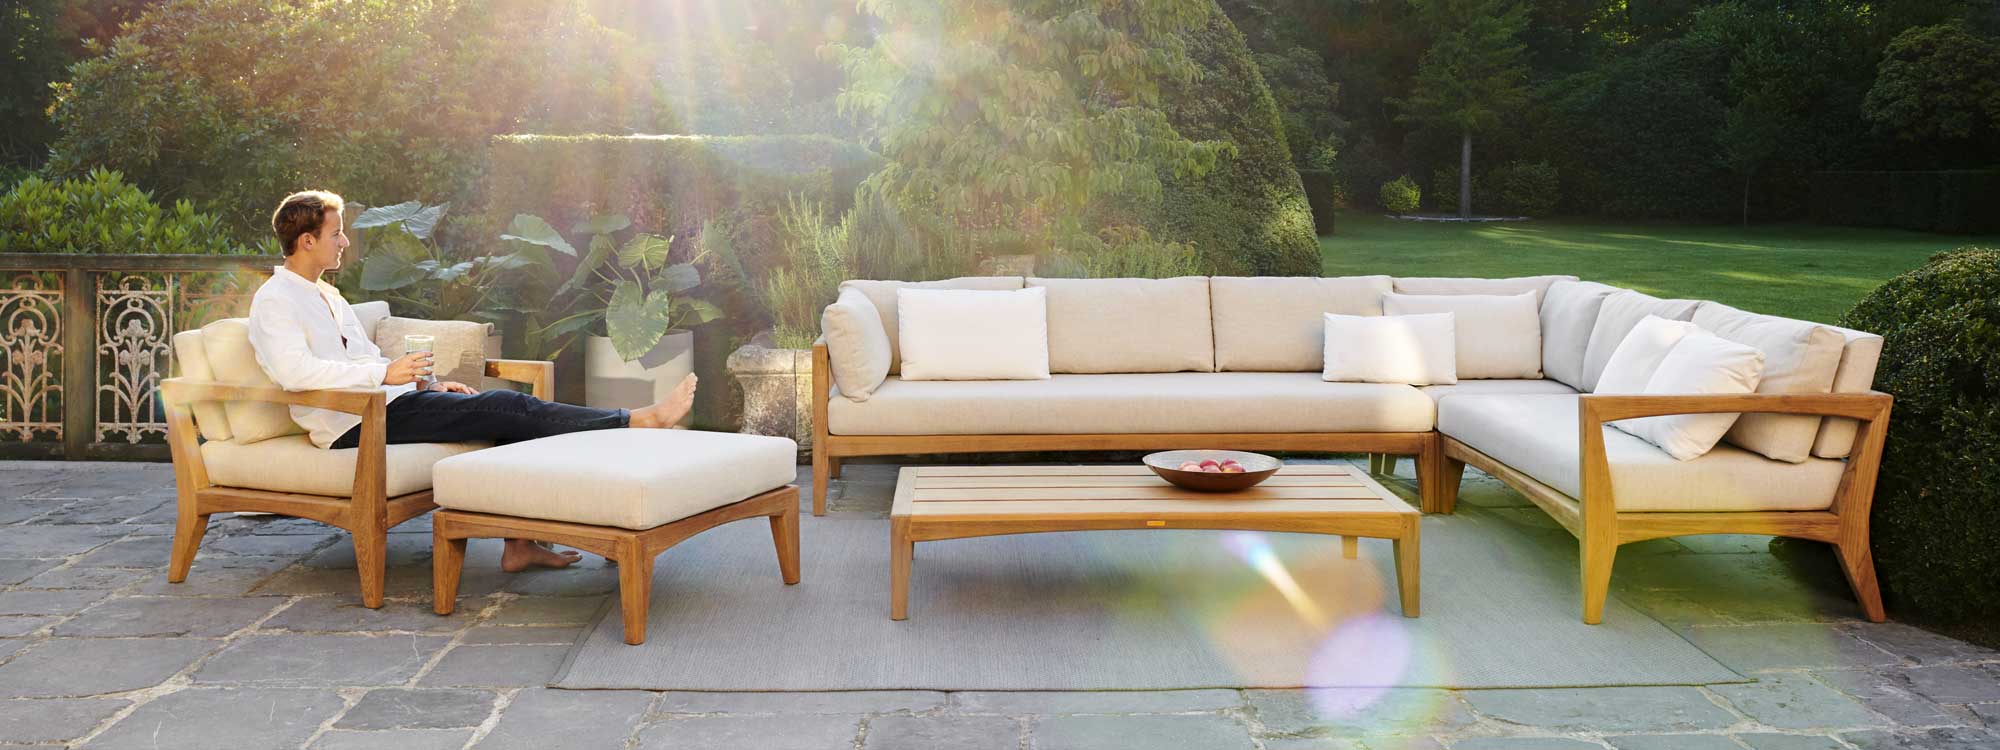 Royal Botania Zenhit teak garden sofa & modern teak furniture is a luxury outdoor sofa in high quality teak garden furniture materials.